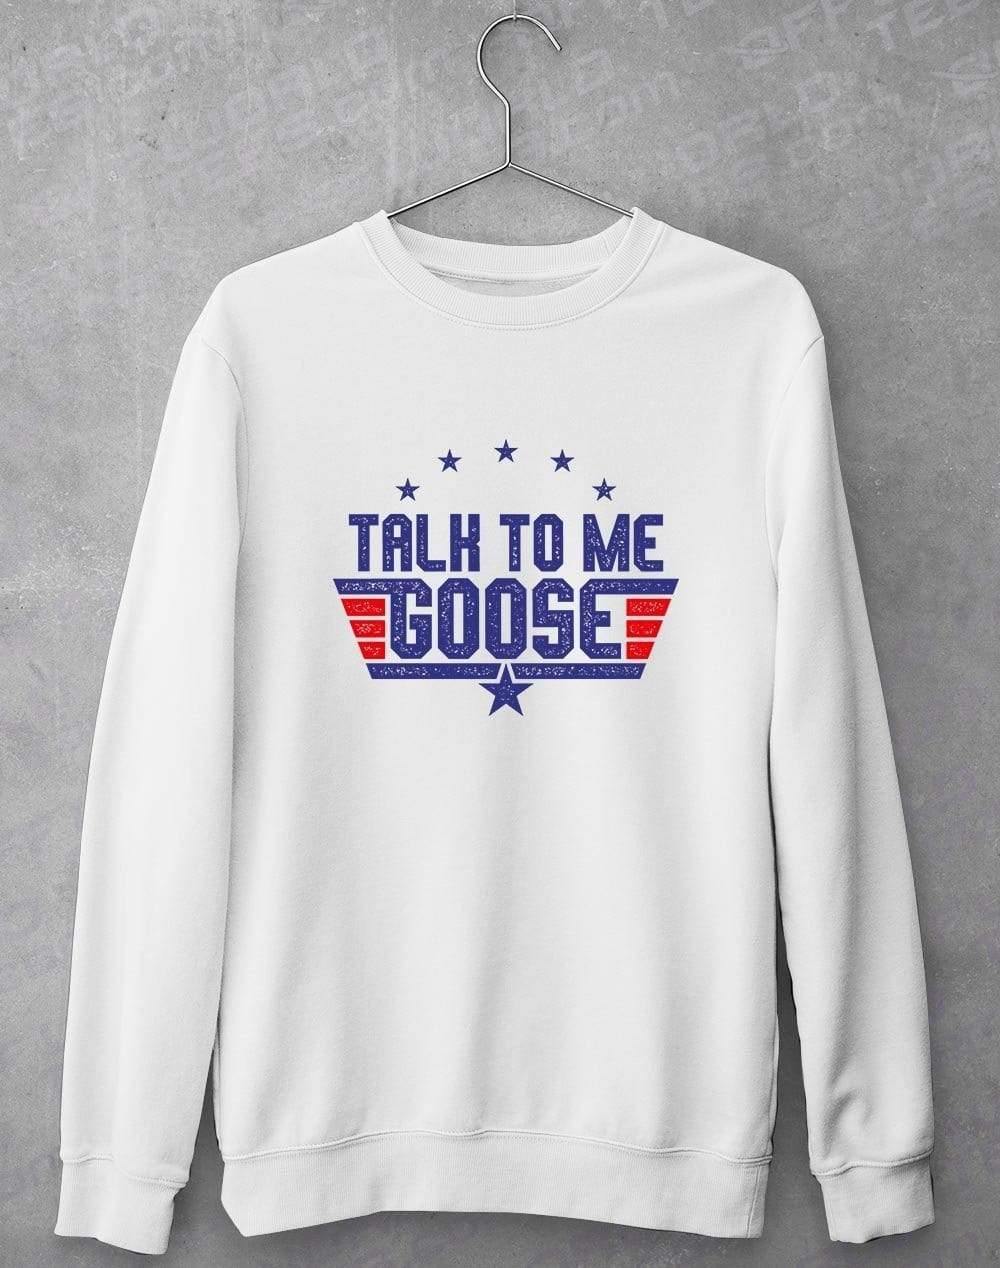 Talk to me Goose Sweatshirt S / White  - Off World Tees